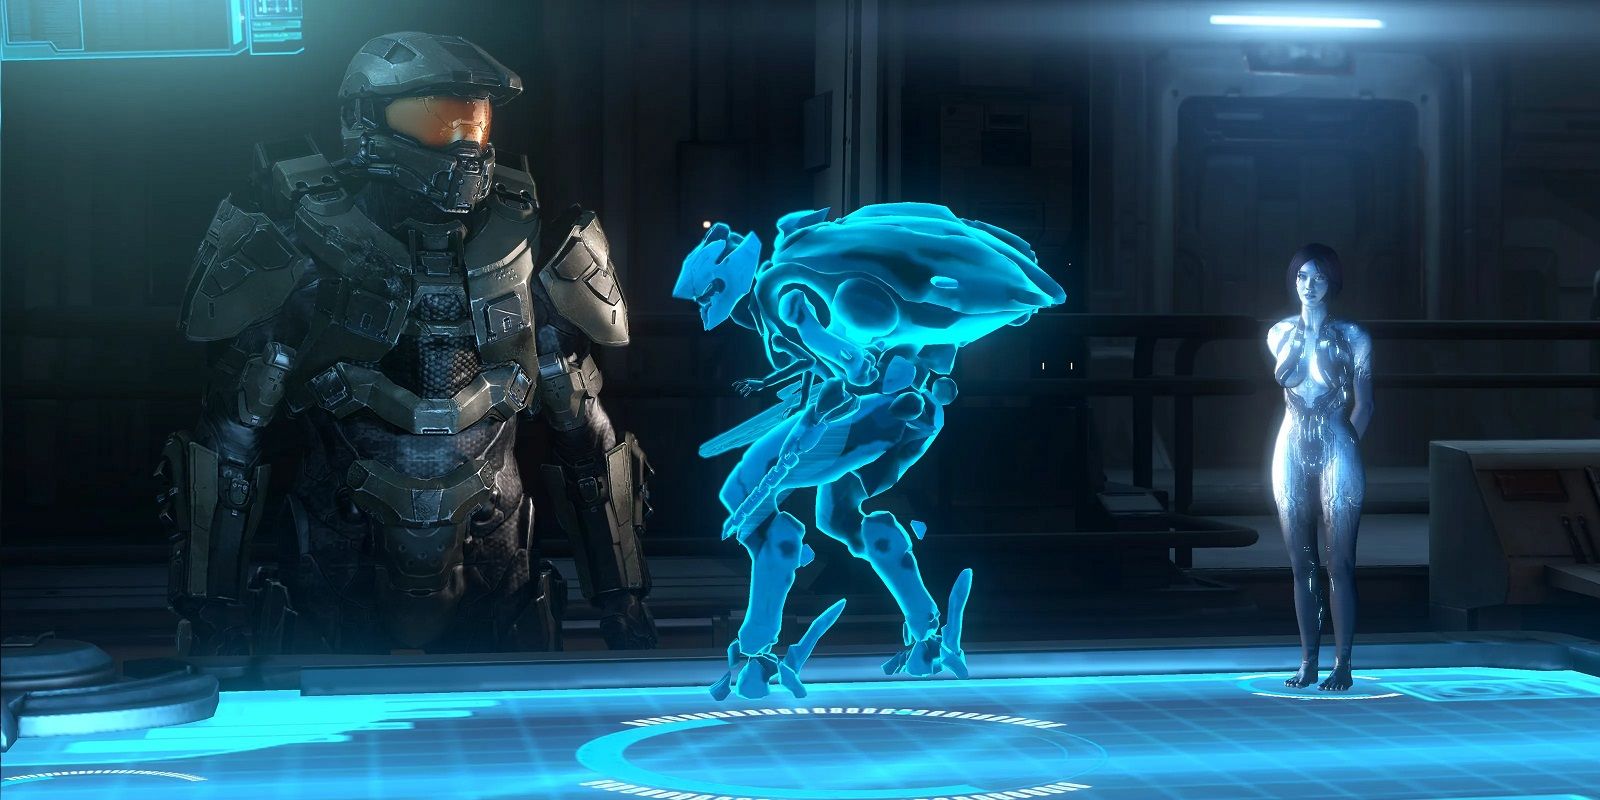 Master Chief and Cortana looking at hologram of a Promethean Knight